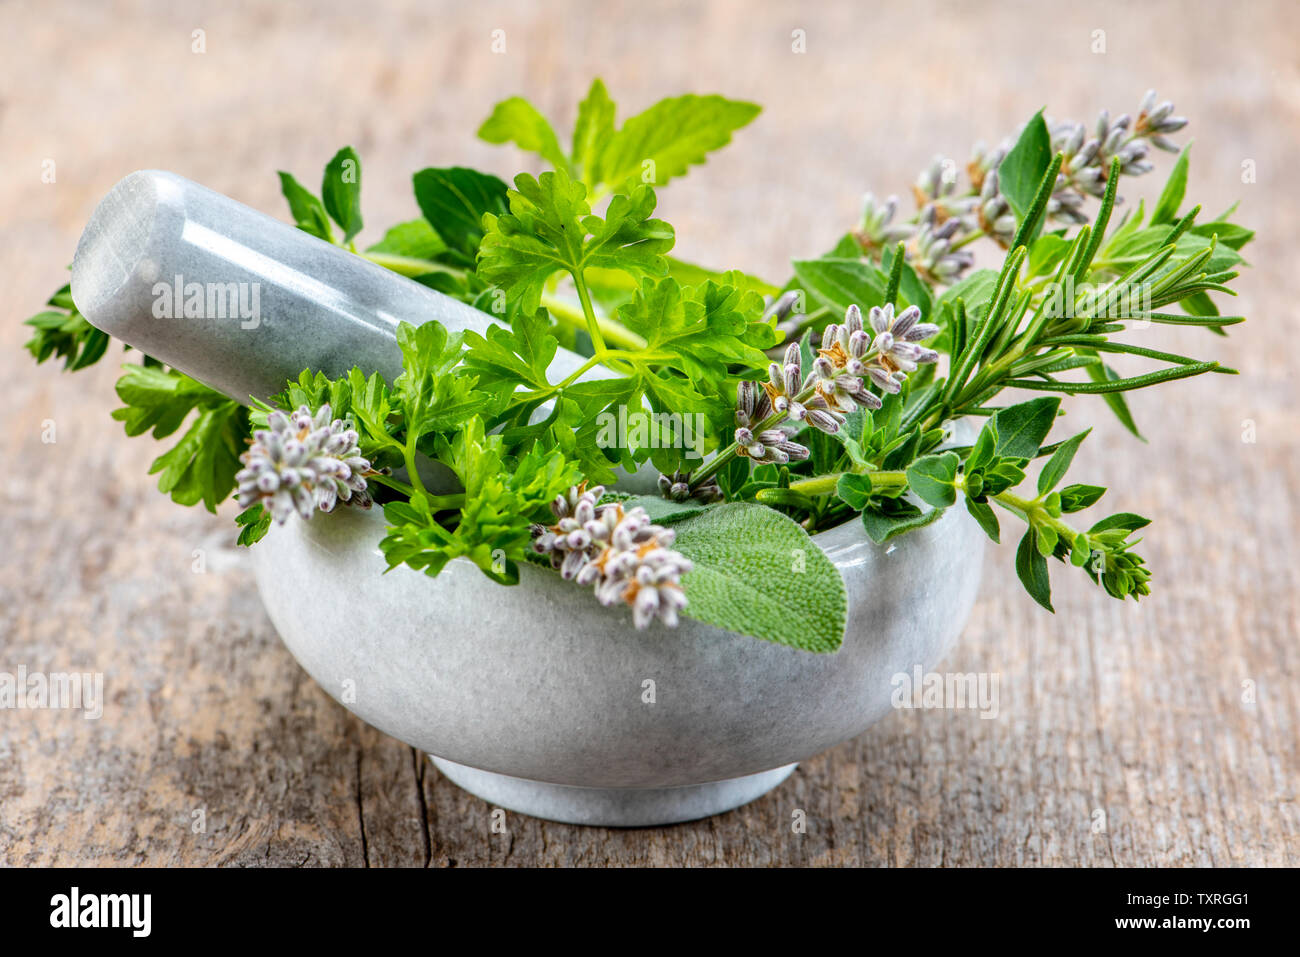 Alternative medicine with medicinal plants Stock Photo